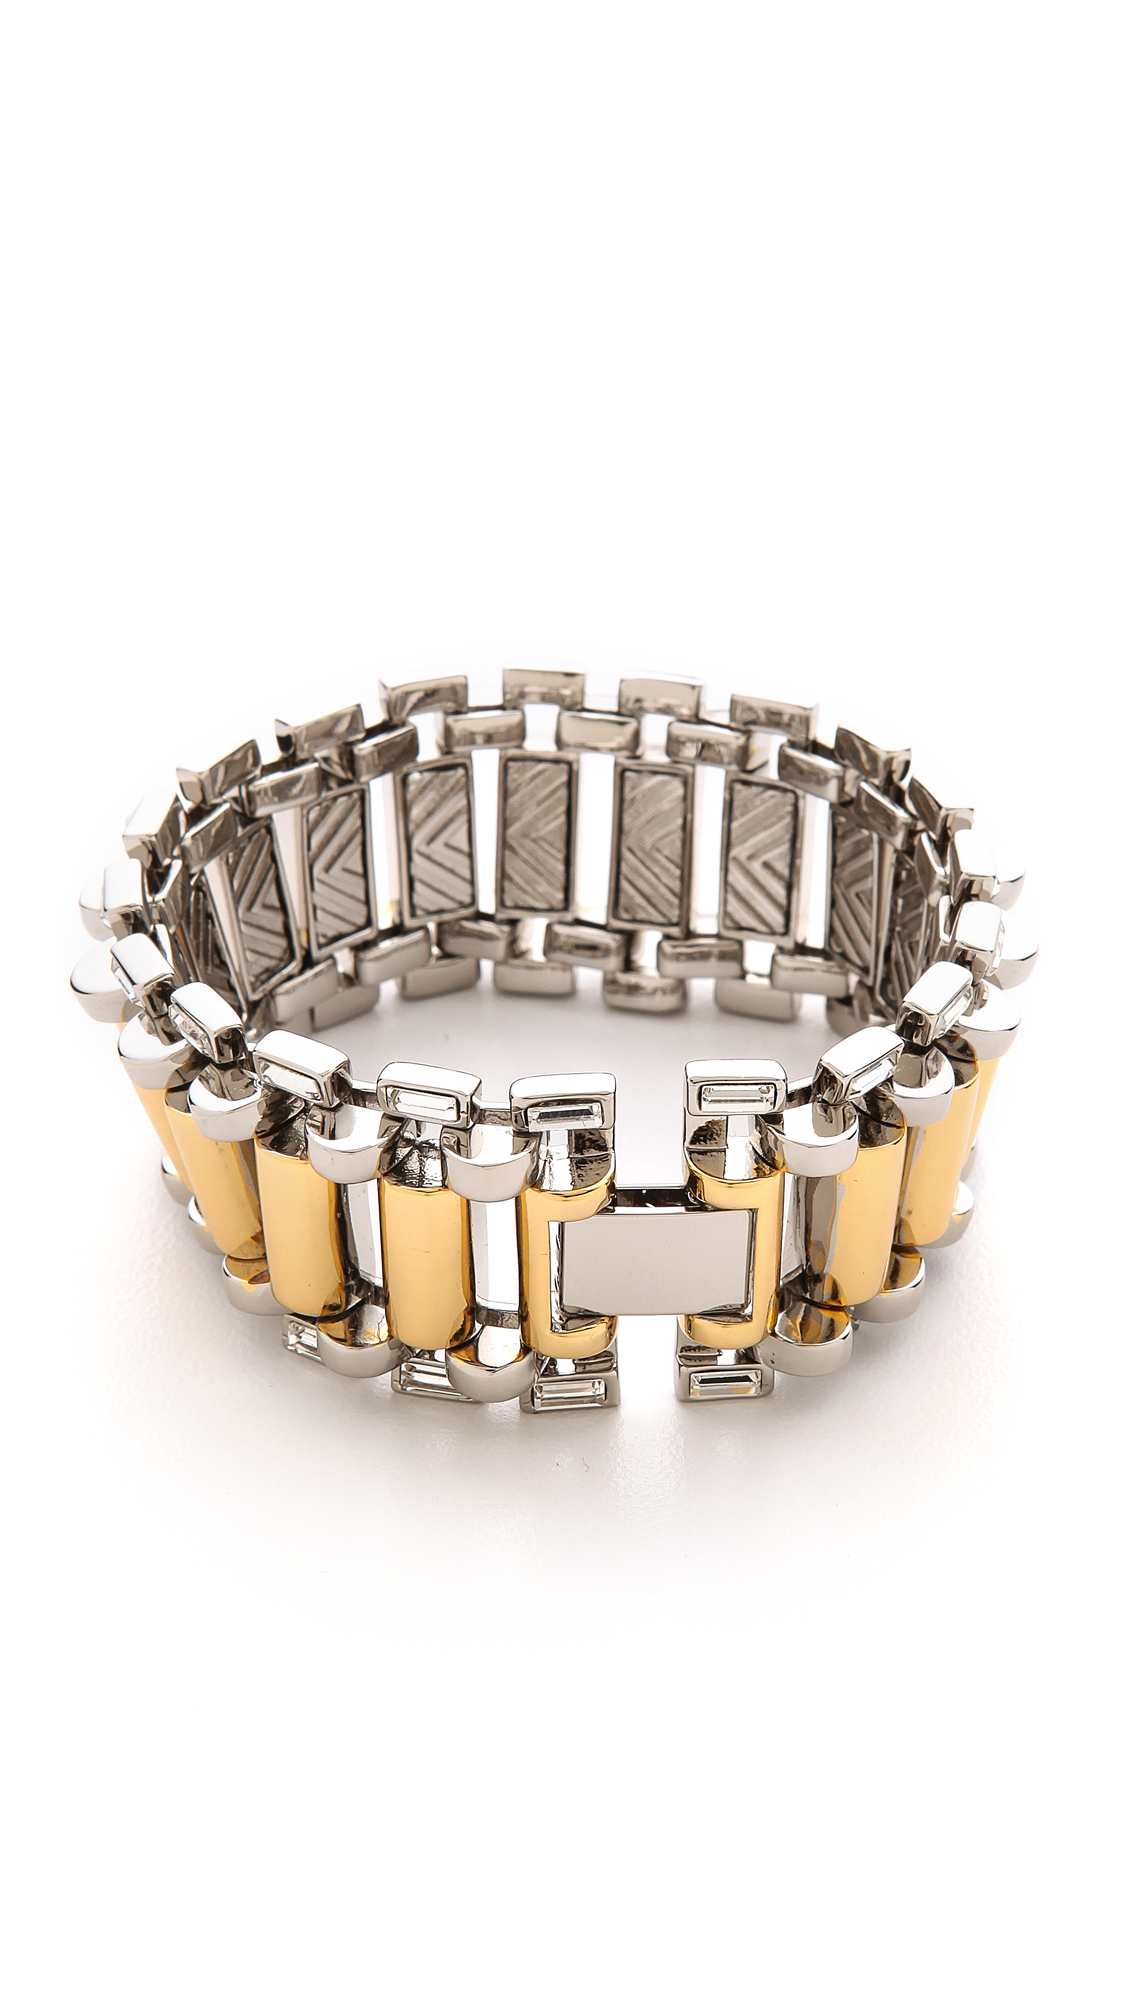 Lyst - Rachel zoe Two Tone Narrow Watchband Bracelet in Metallic